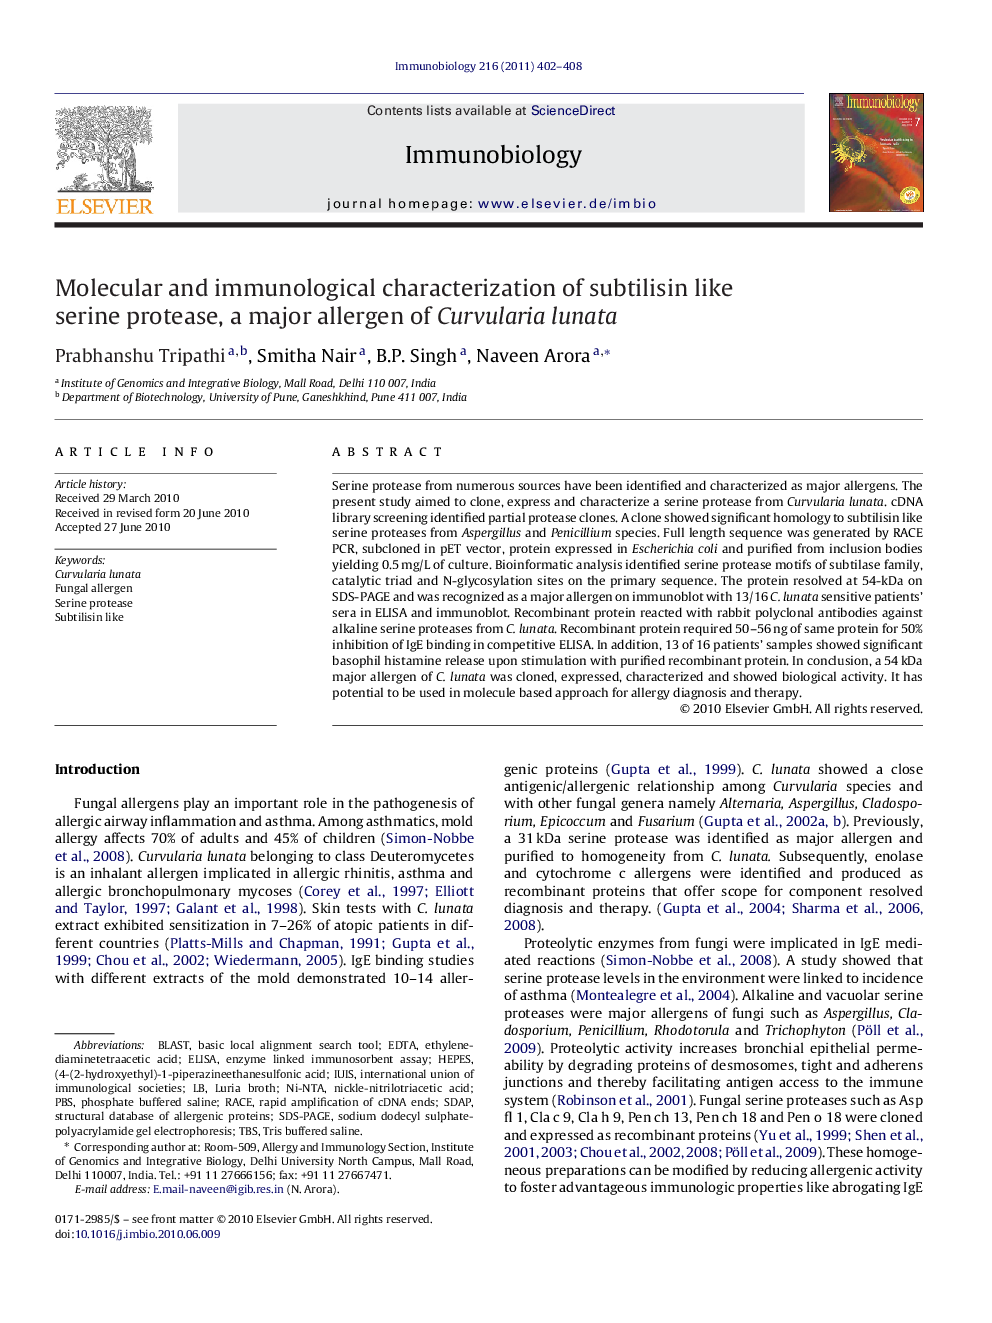 Molecular and immunological characterization of subtilisin like serine protease, a major allergen of Curvularia lunata